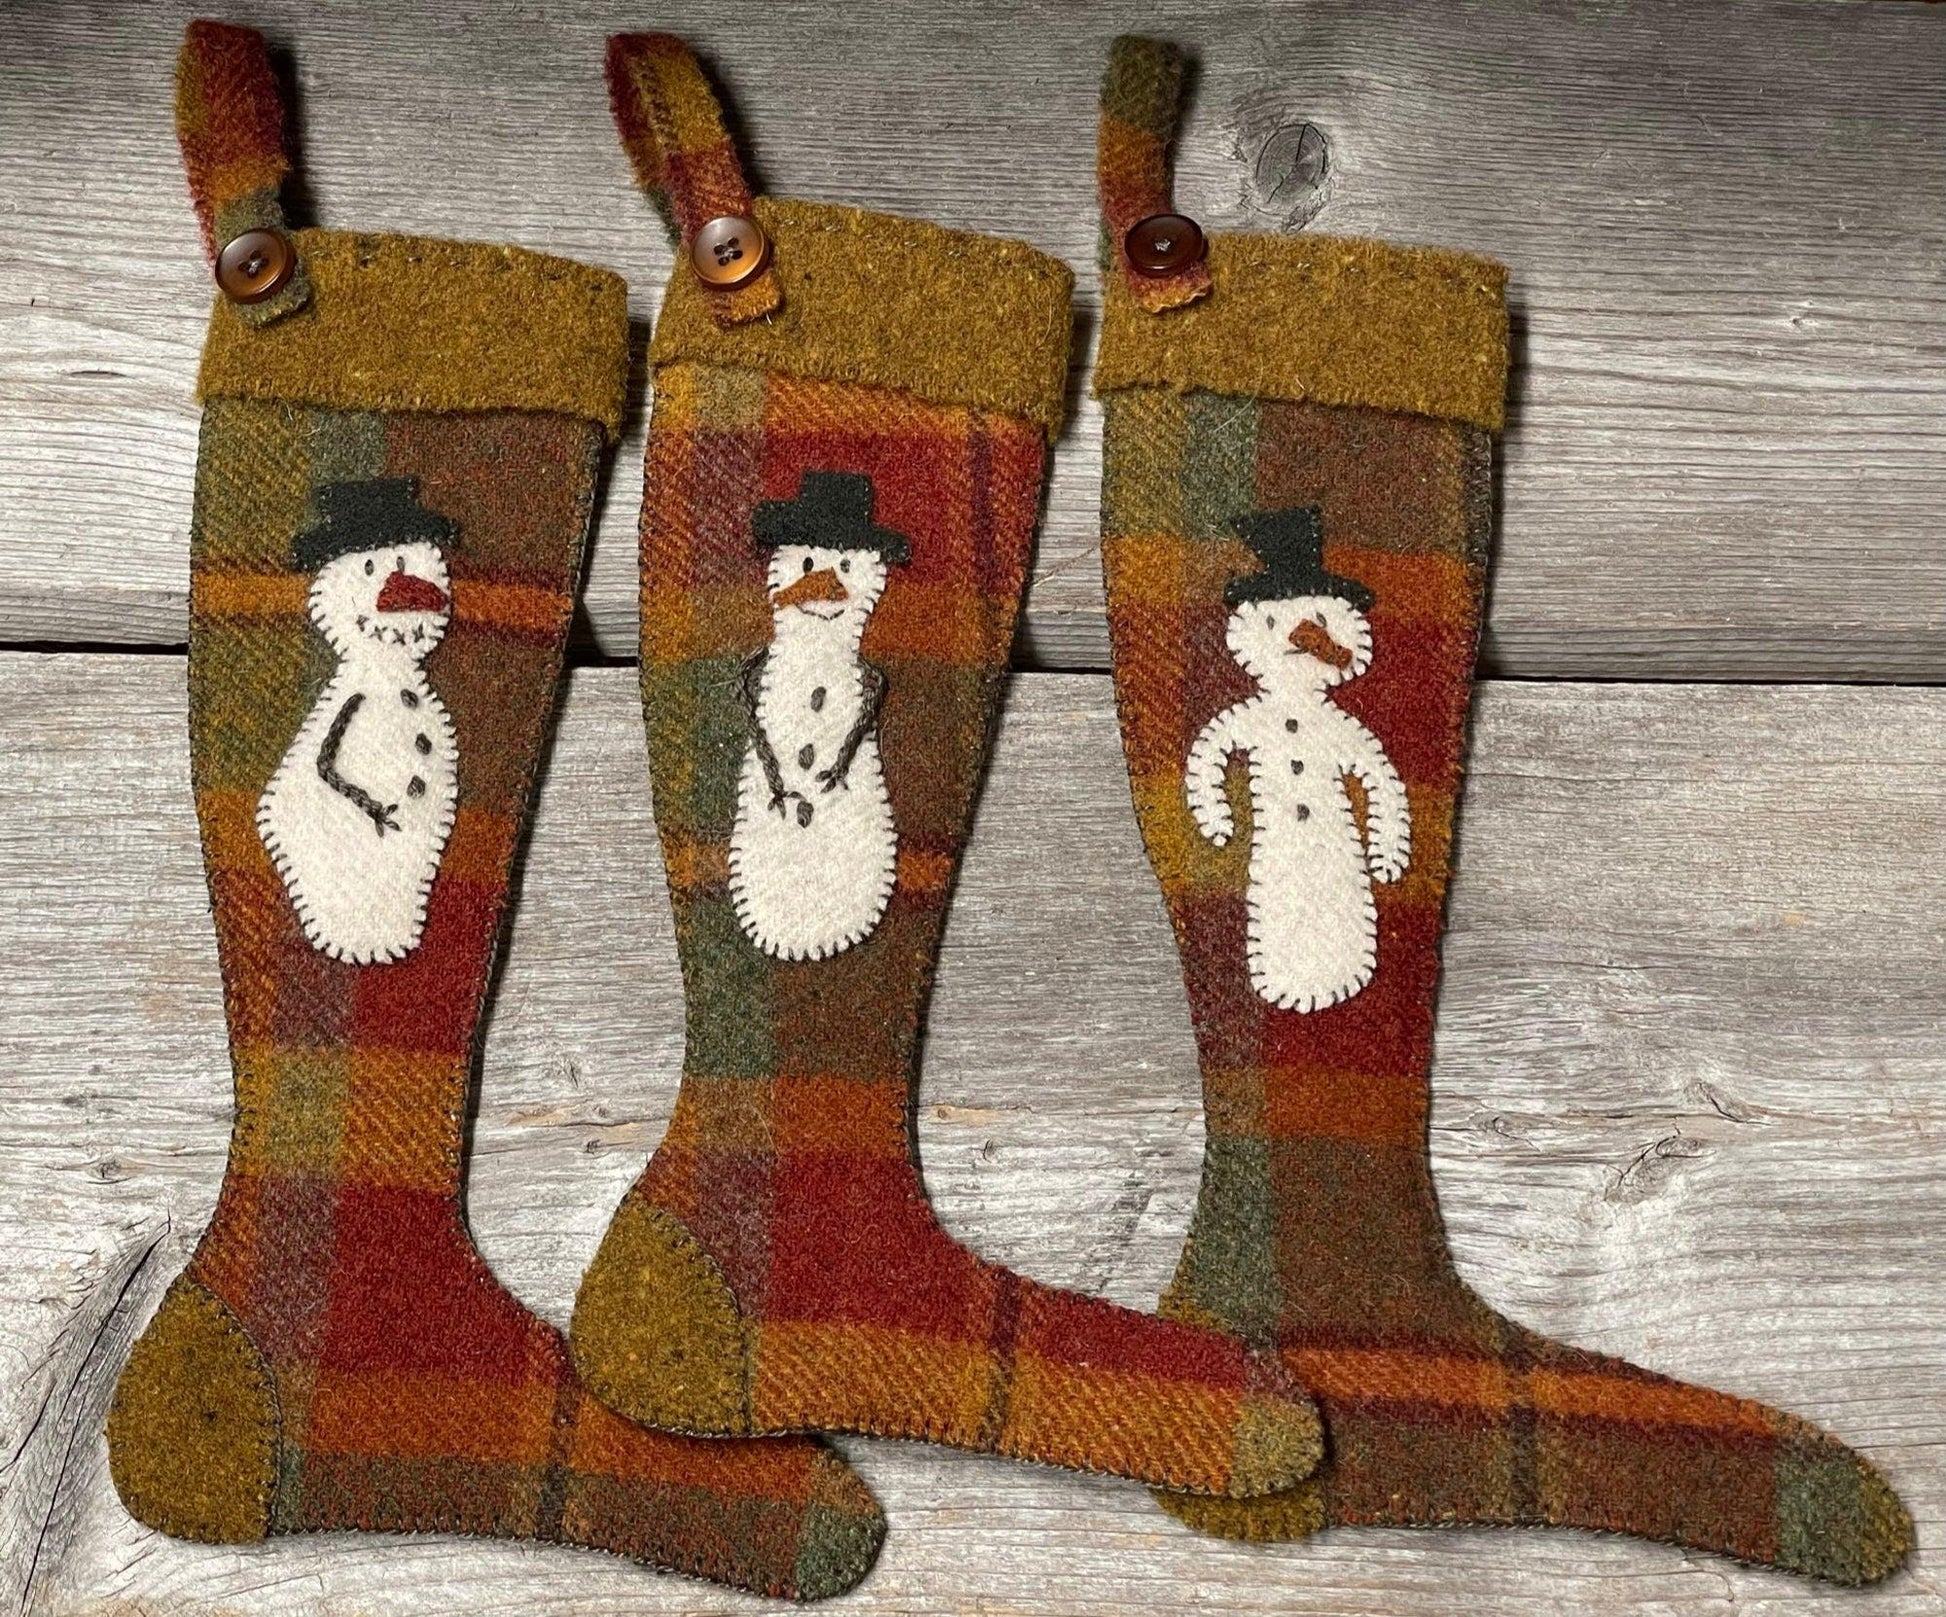 SNOWMEN STOCKINGS - Set of 3 Paper Pattern - All About Ewe Wool Shop